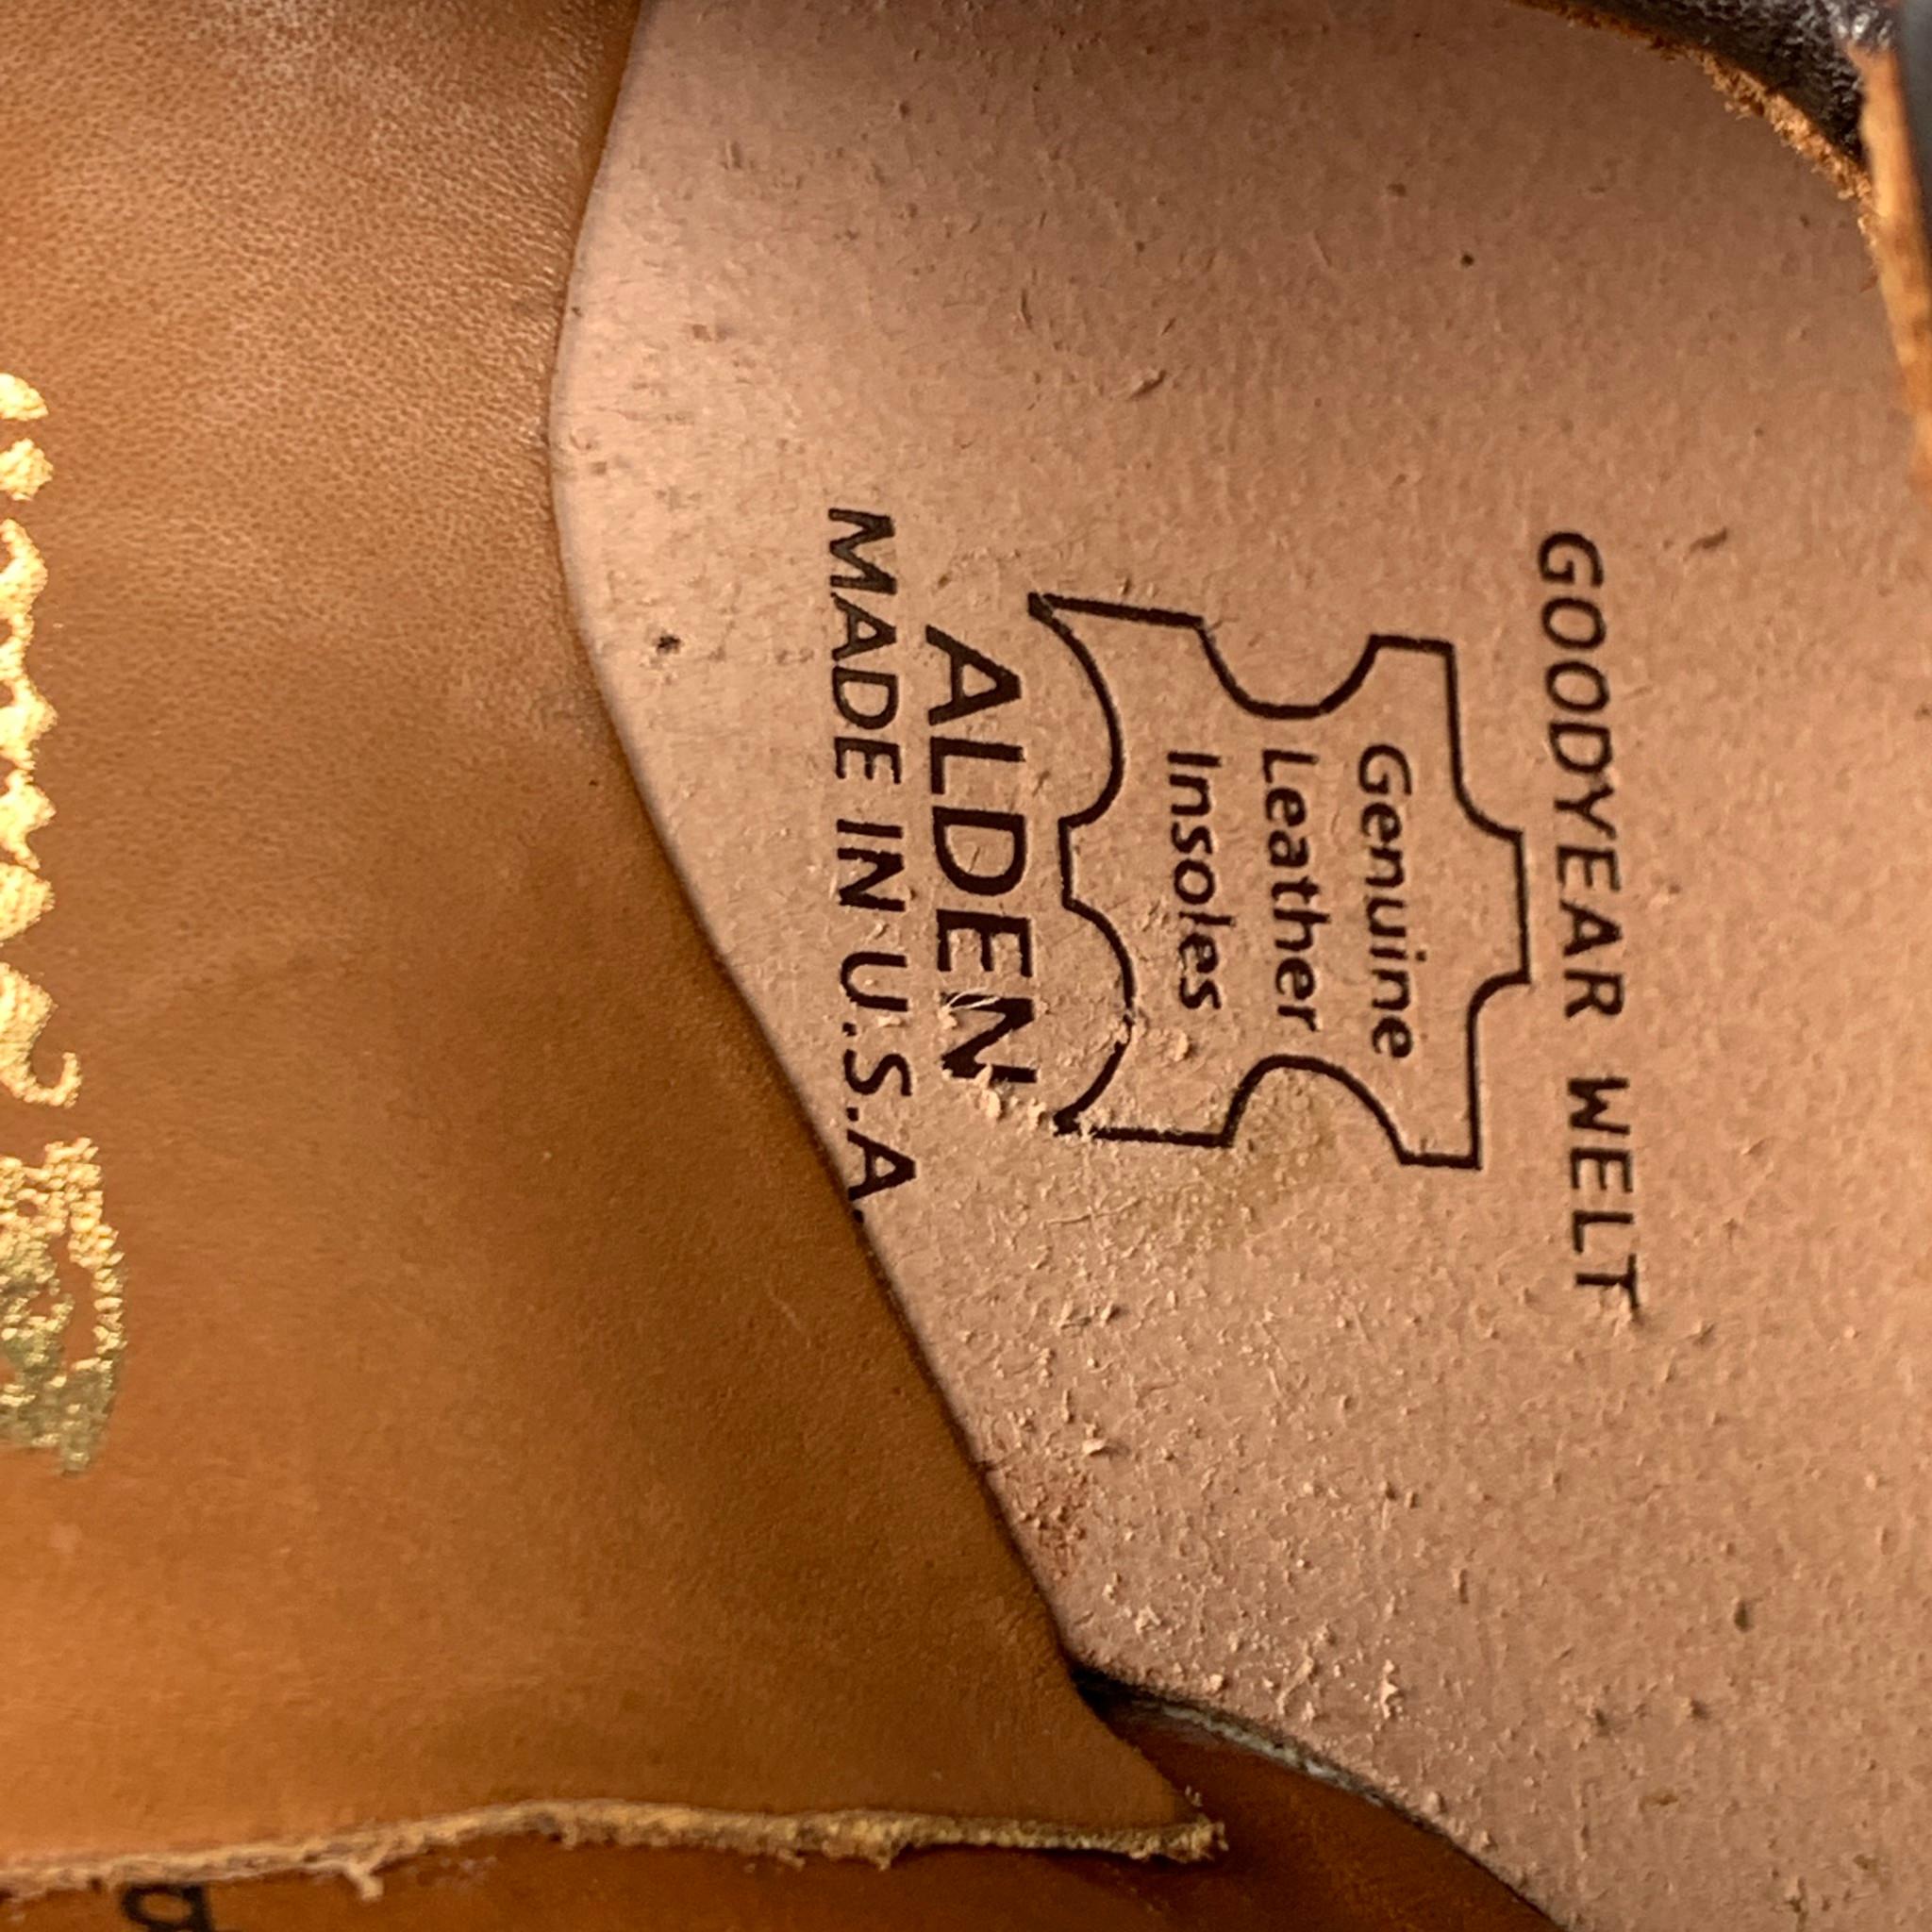 ALDEN Bootmaker Edition Size 7 Brown Leather Tassels Loafers 4